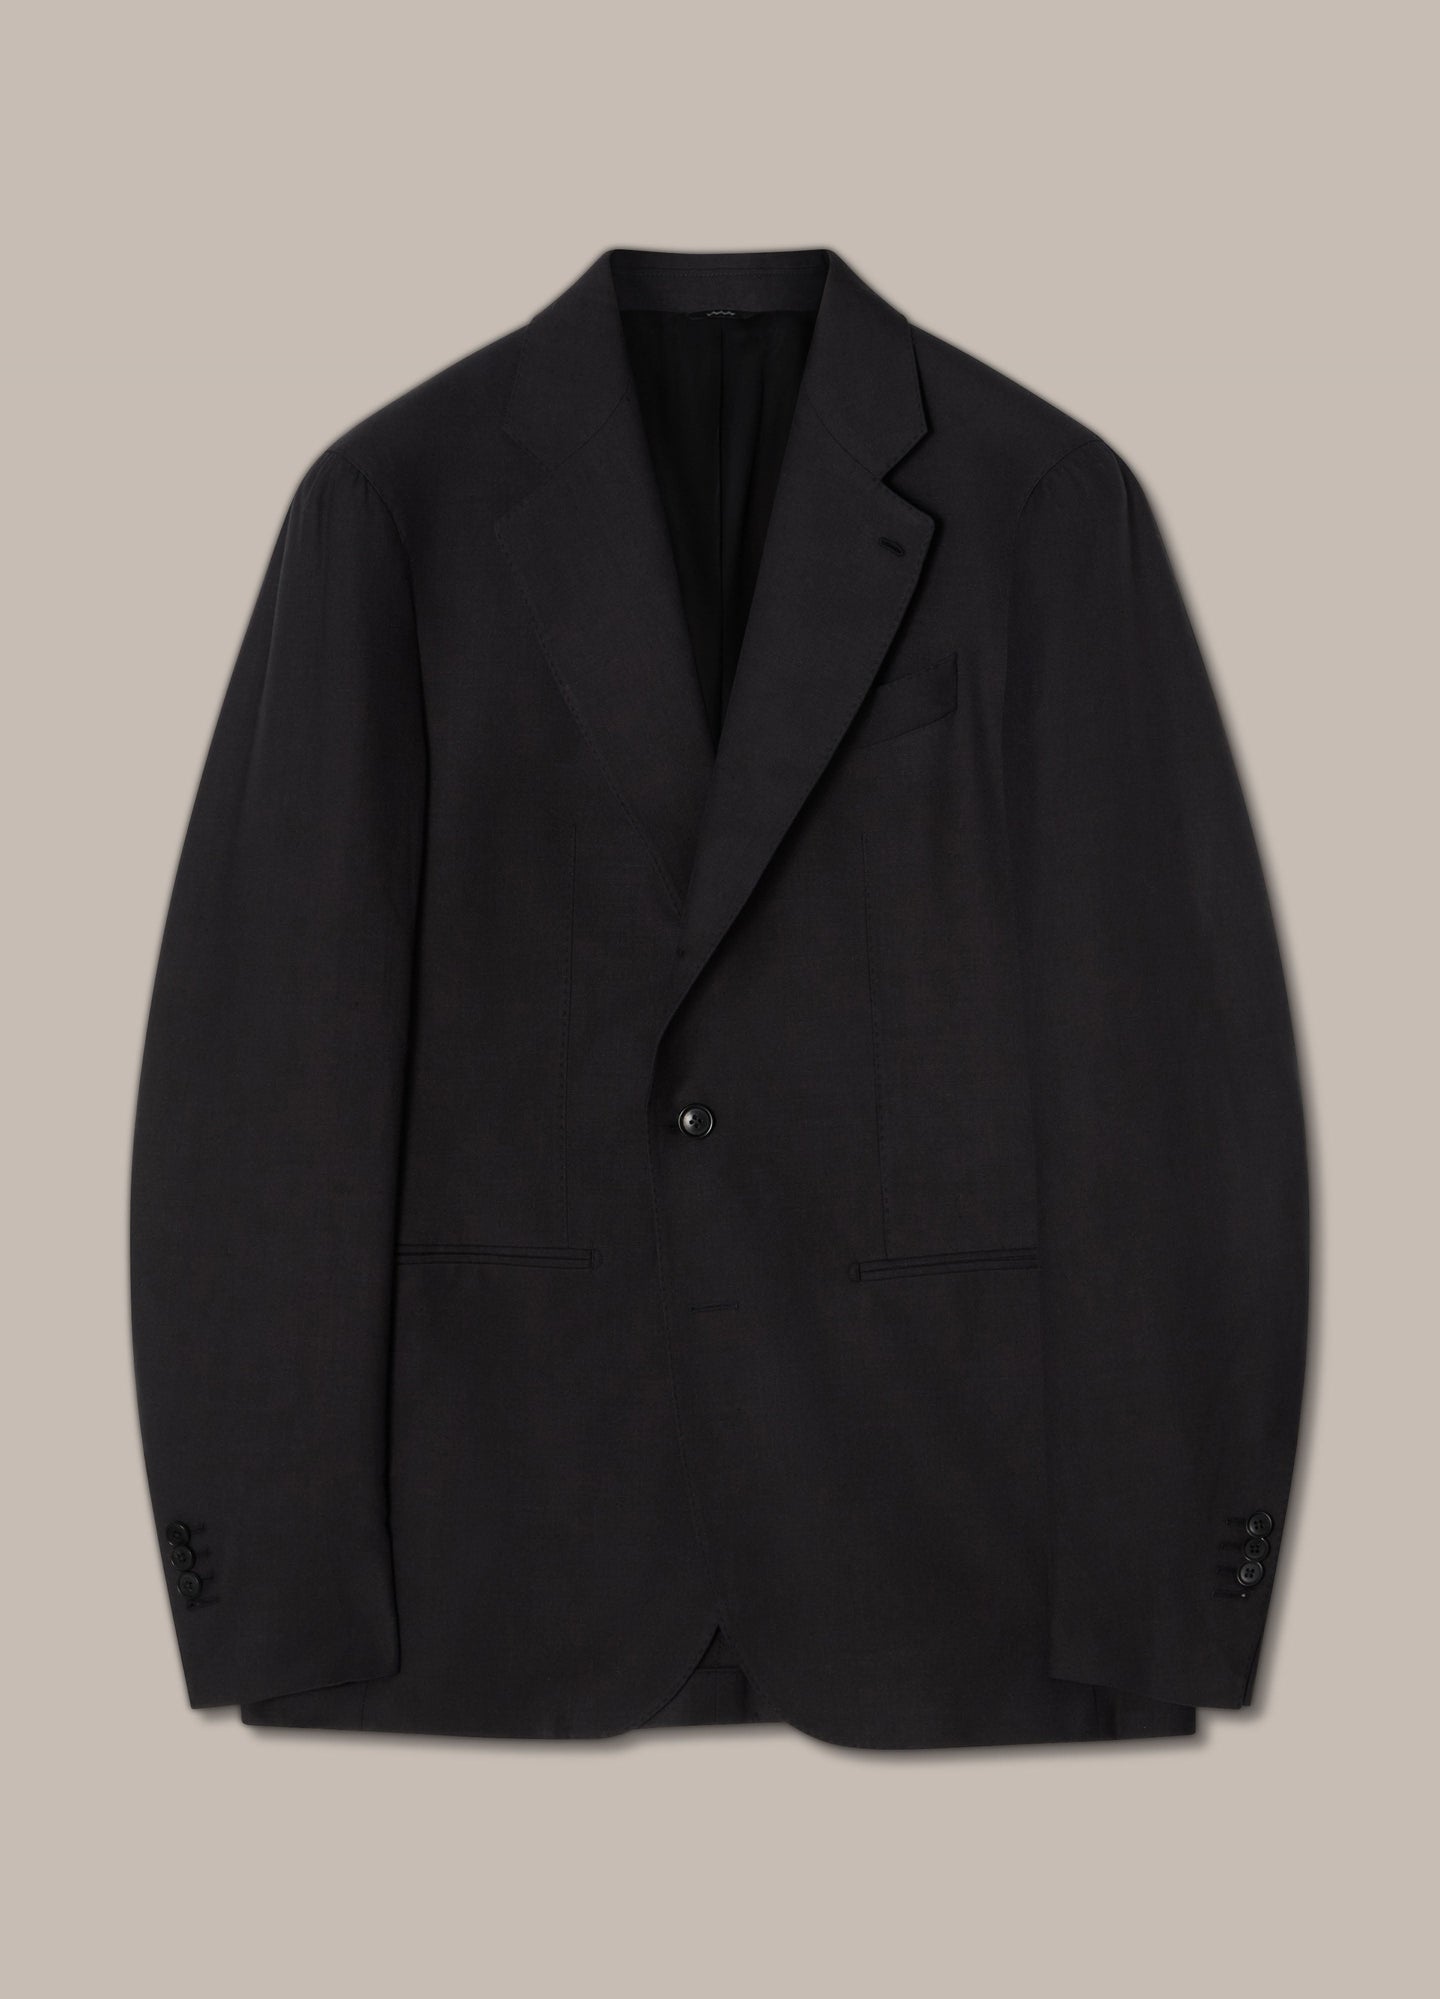 Don Wool/Silk/Linen Suit - Black Berg & Berg